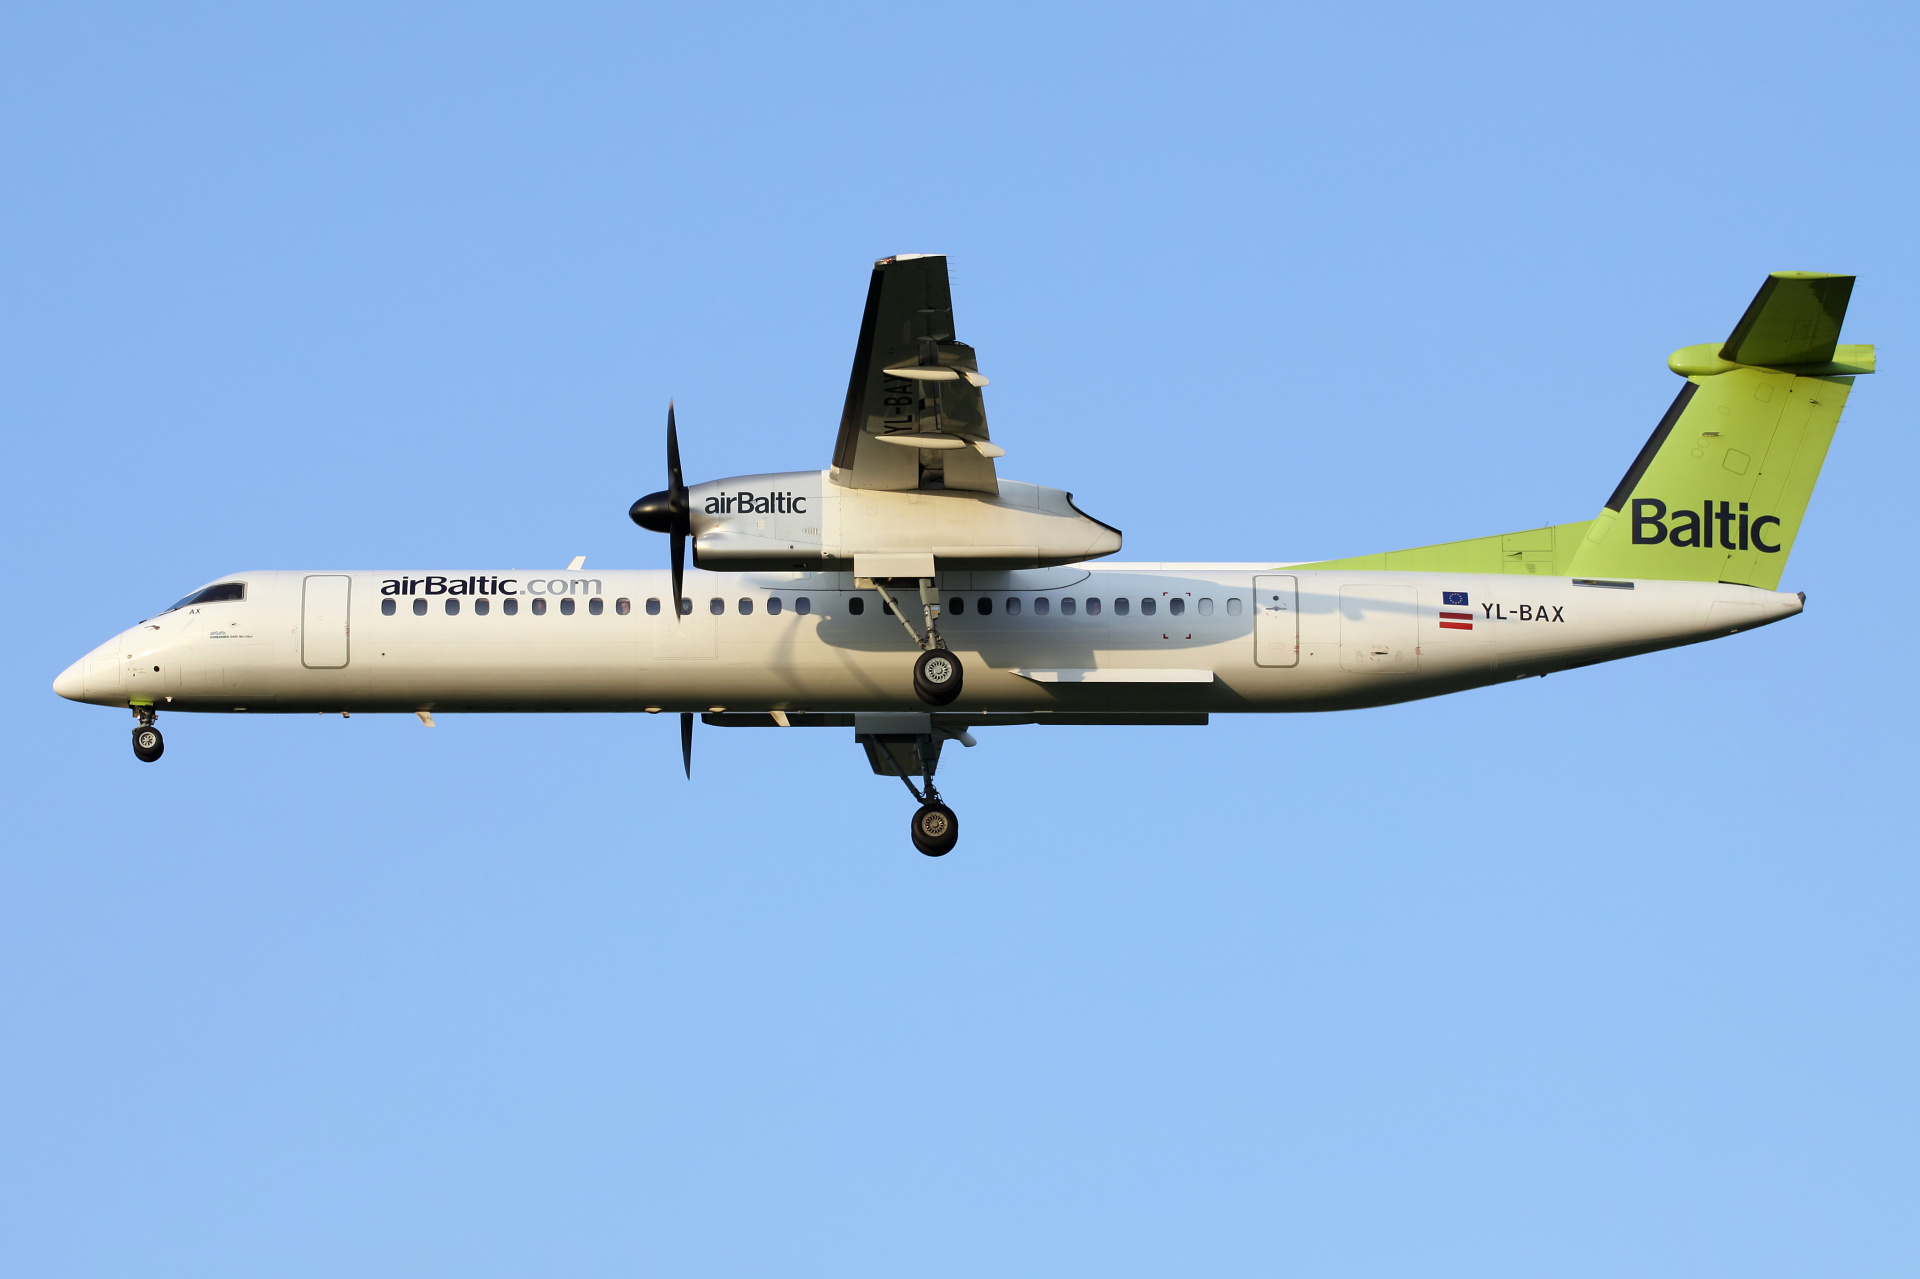 YL-BAX (Aircraft » EPWA Spotting » De Havilland Canada DHC-8 Dash 8 » airBaltic)